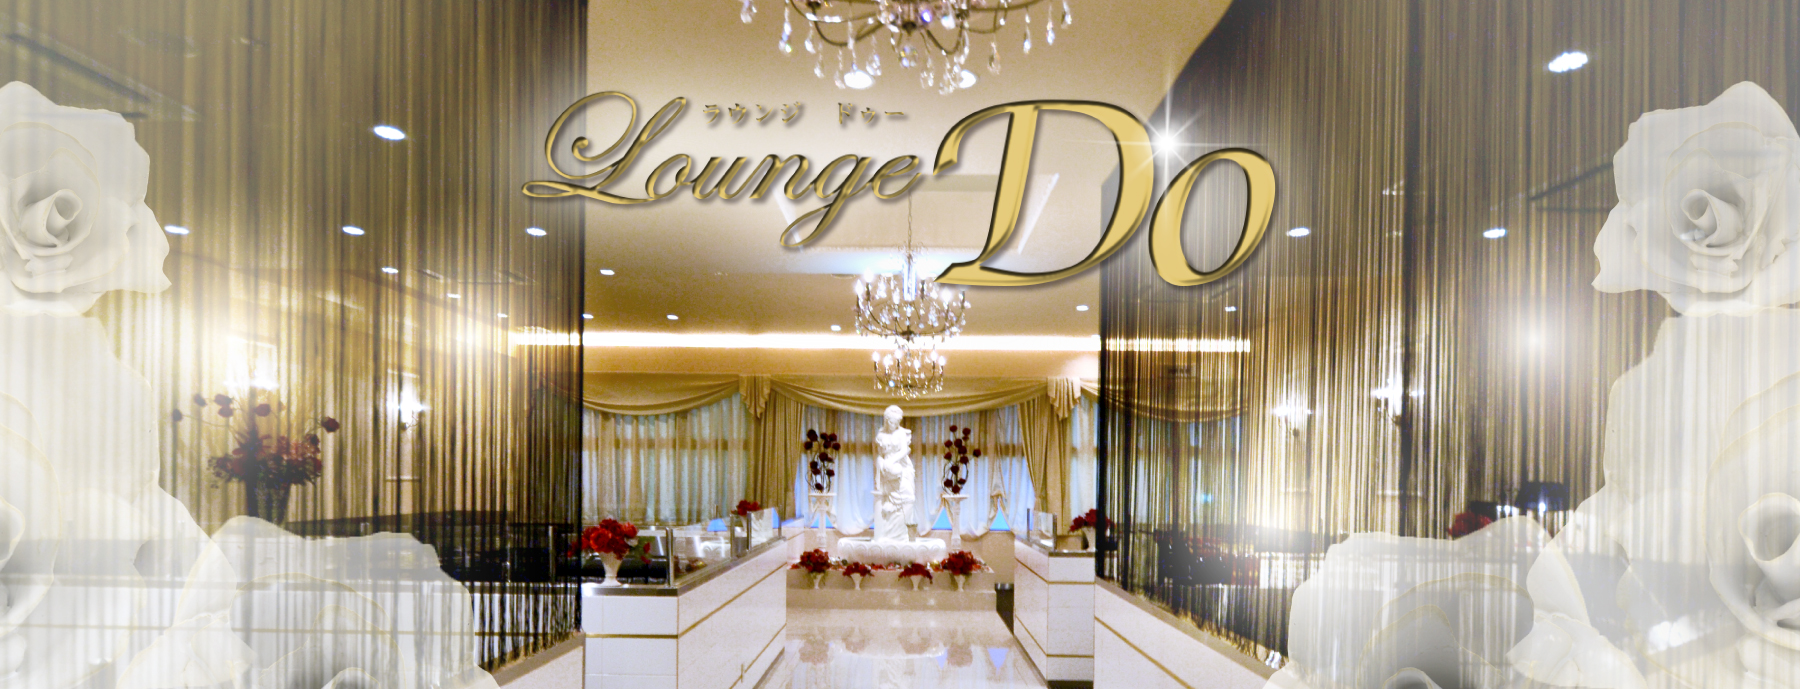 LEE򌤖x EWEXibN Lounge Do 〜hD[〜̓X܉摜1